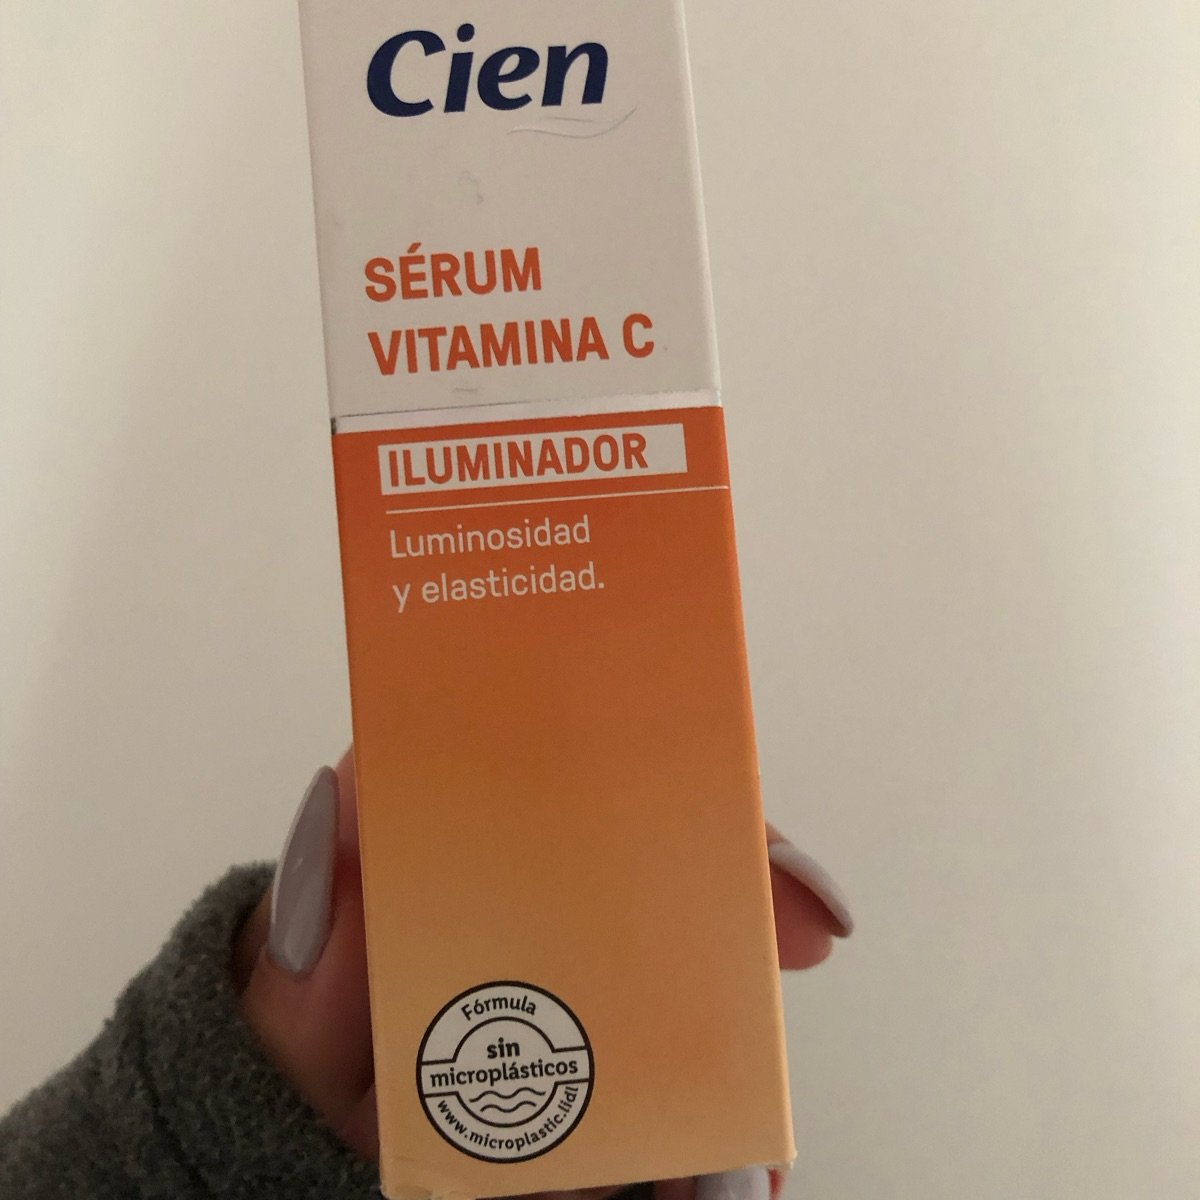 Cien serum vitamina C Reviews | abillion